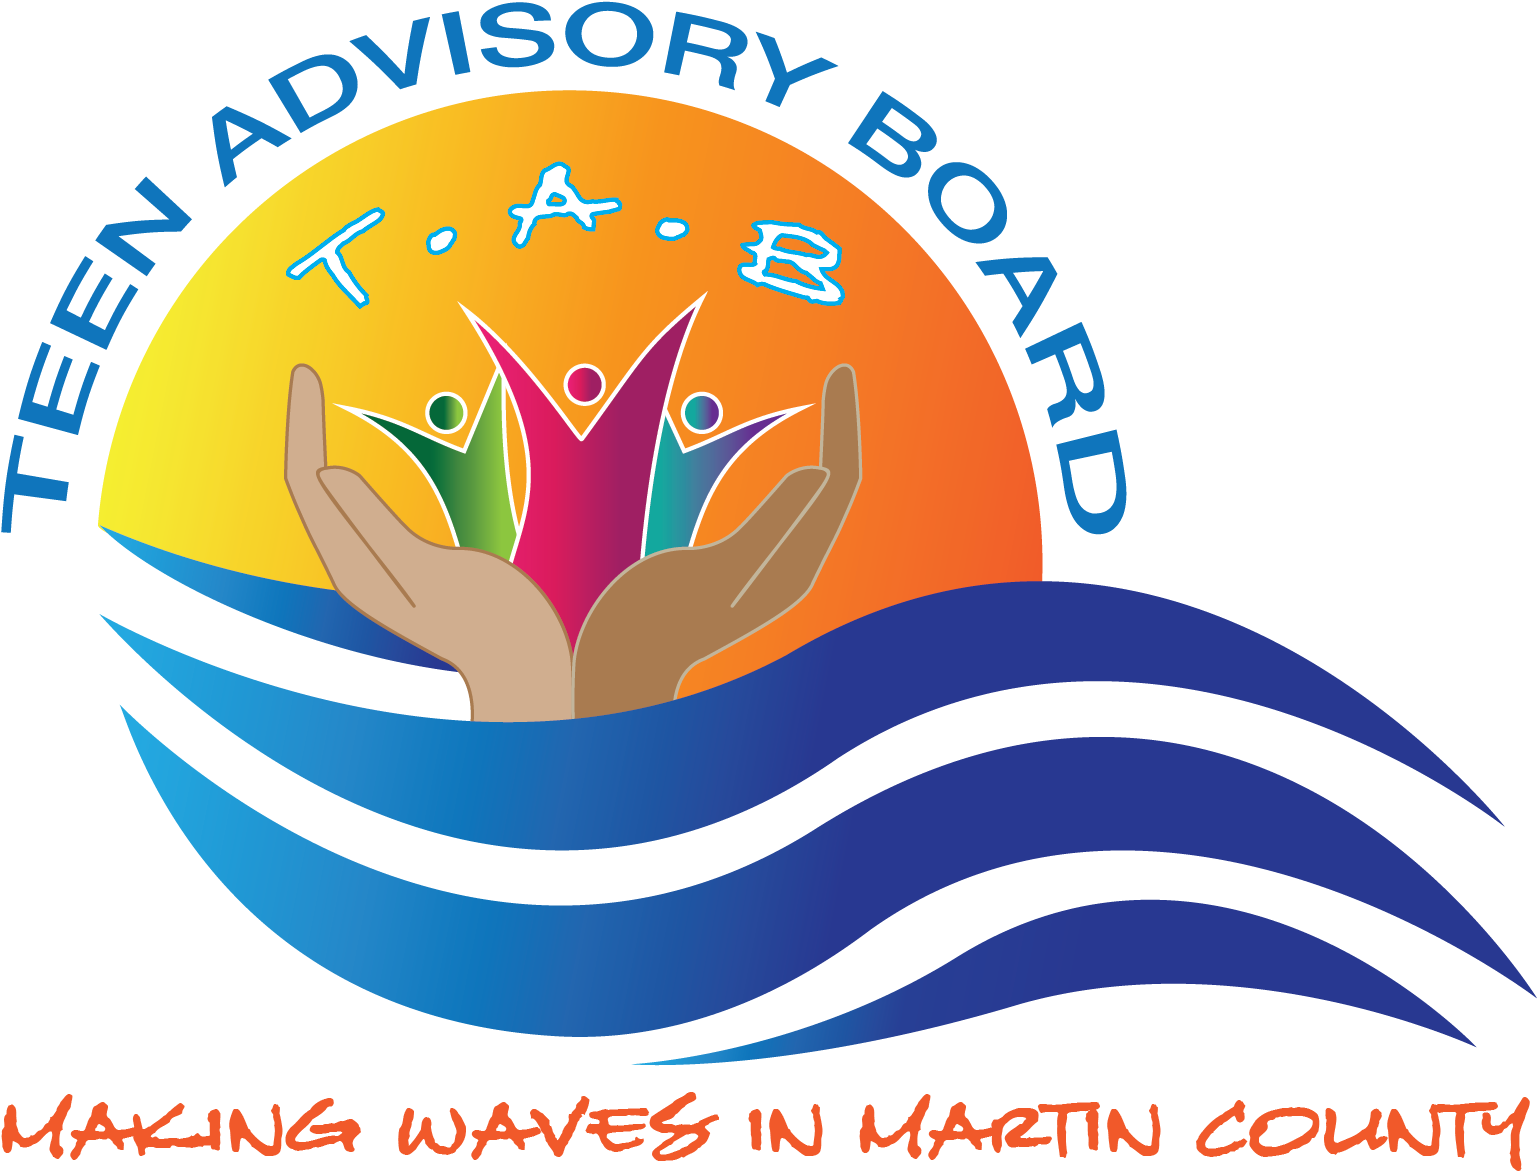 Join The Teen Advisory Board - Advisory Board (1538x1177)